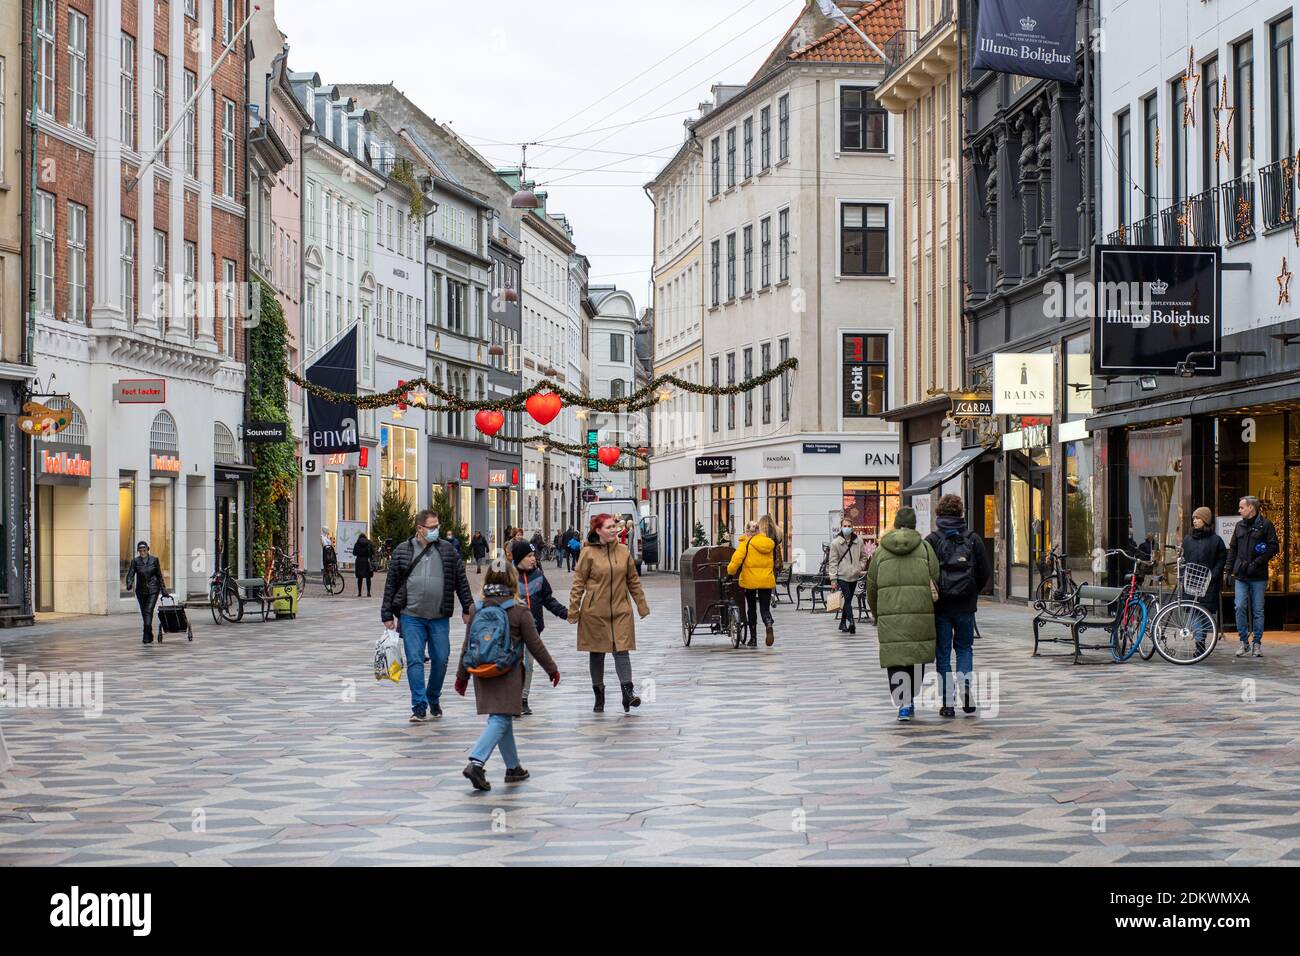 Shopping street with Christmas decoration in Copenhagen, Denmark Stock Photo